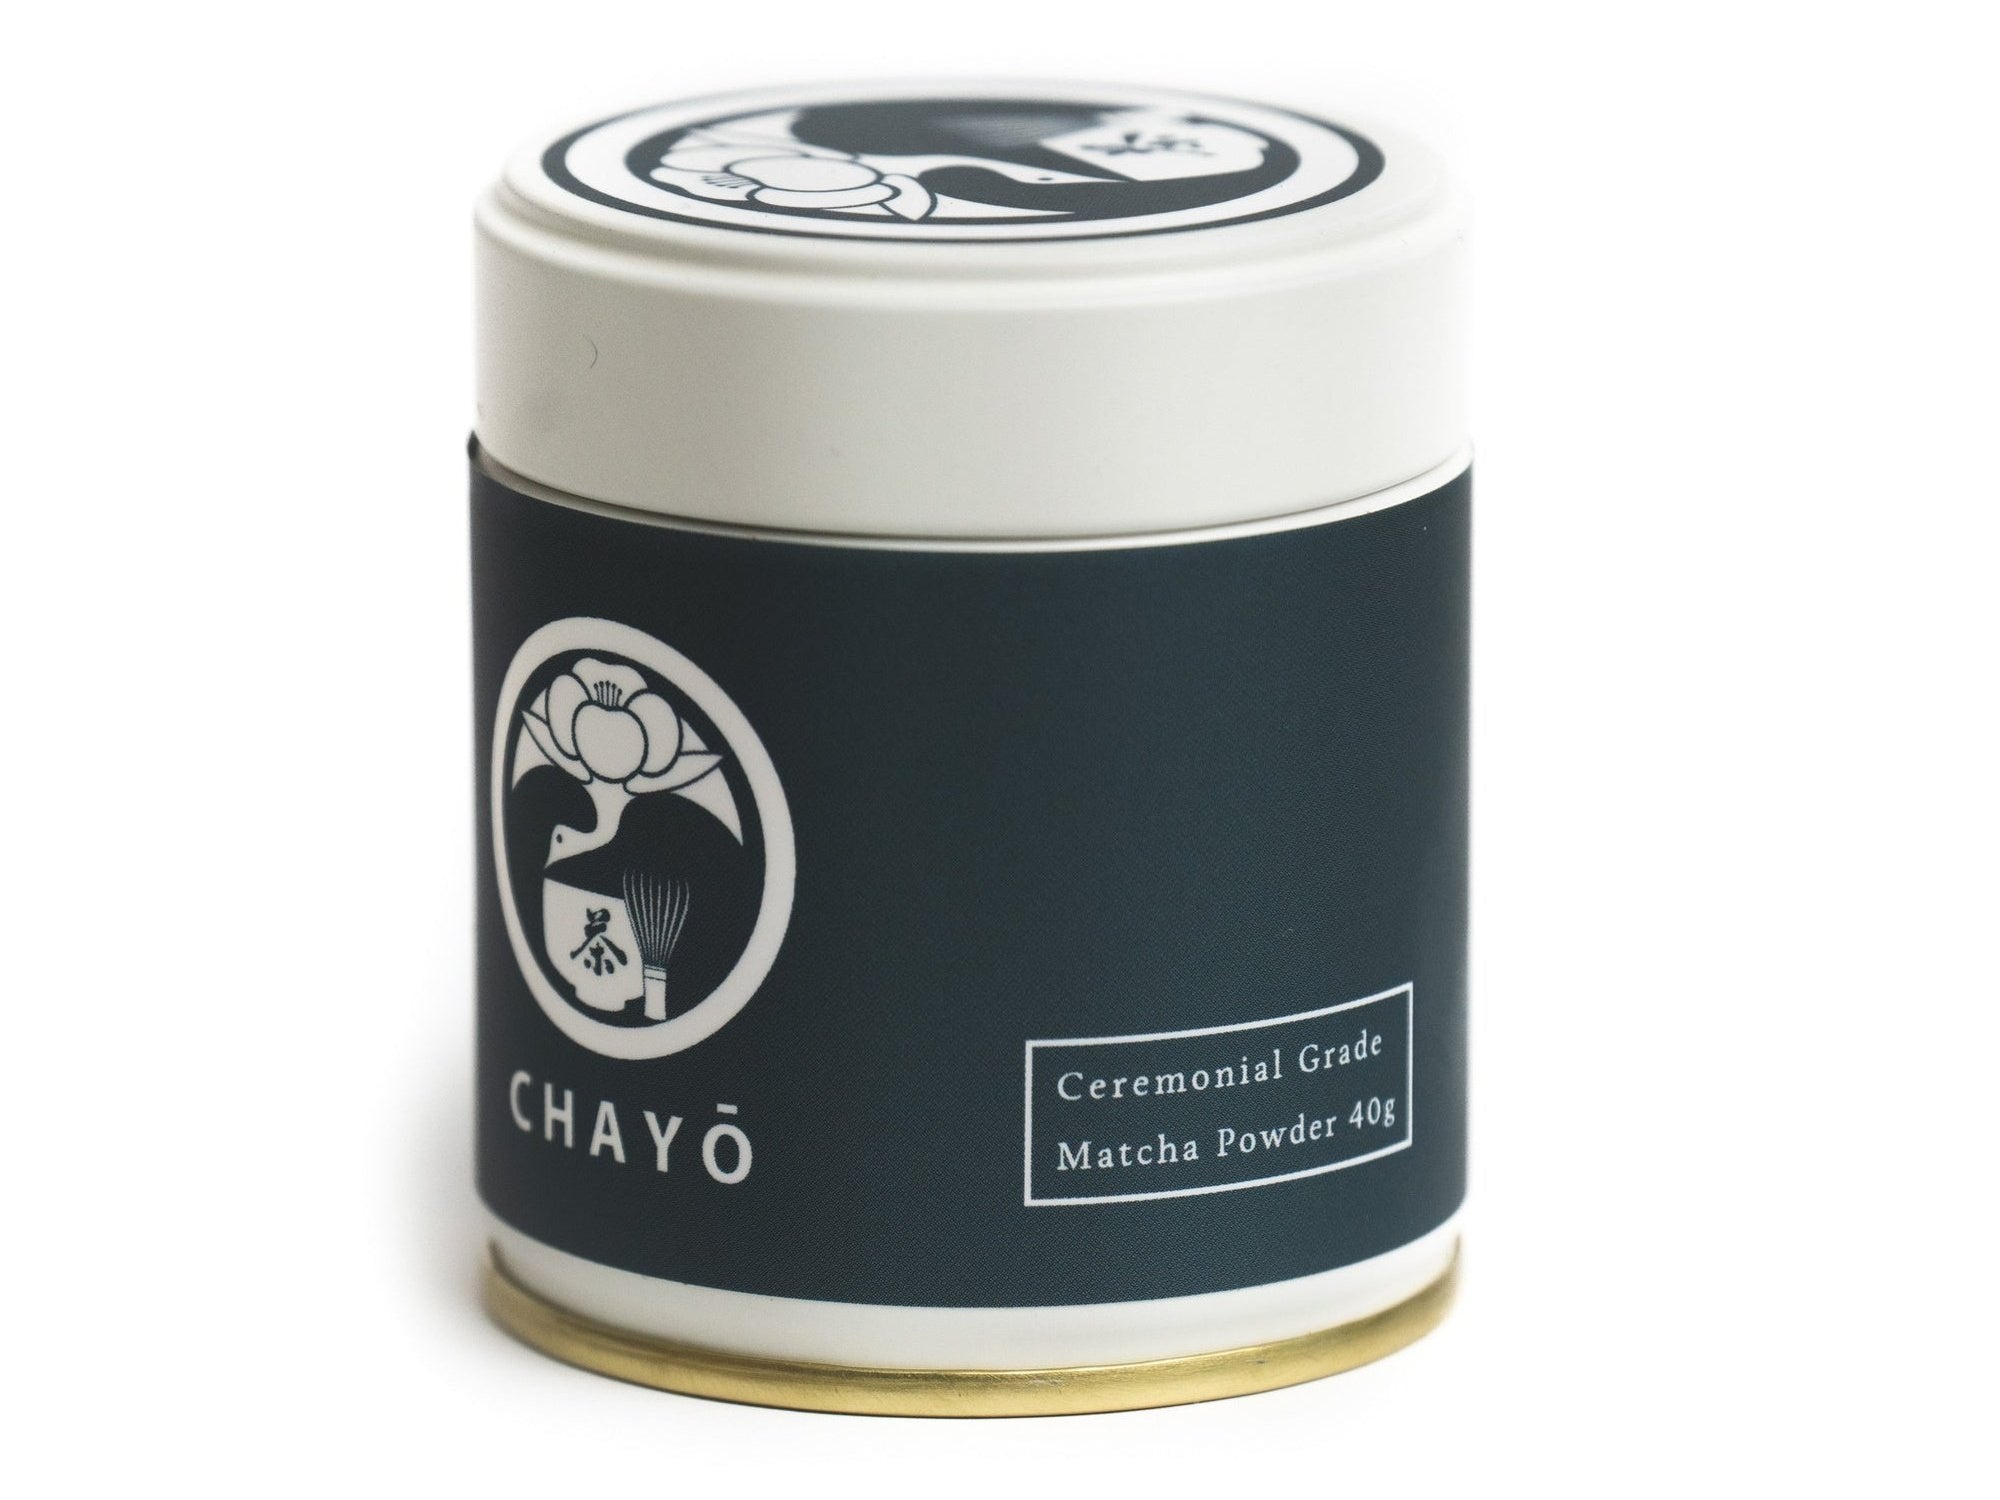 Chayo Ceremonial Matcha Powder Tin 40g　チャヨウのお抹茶